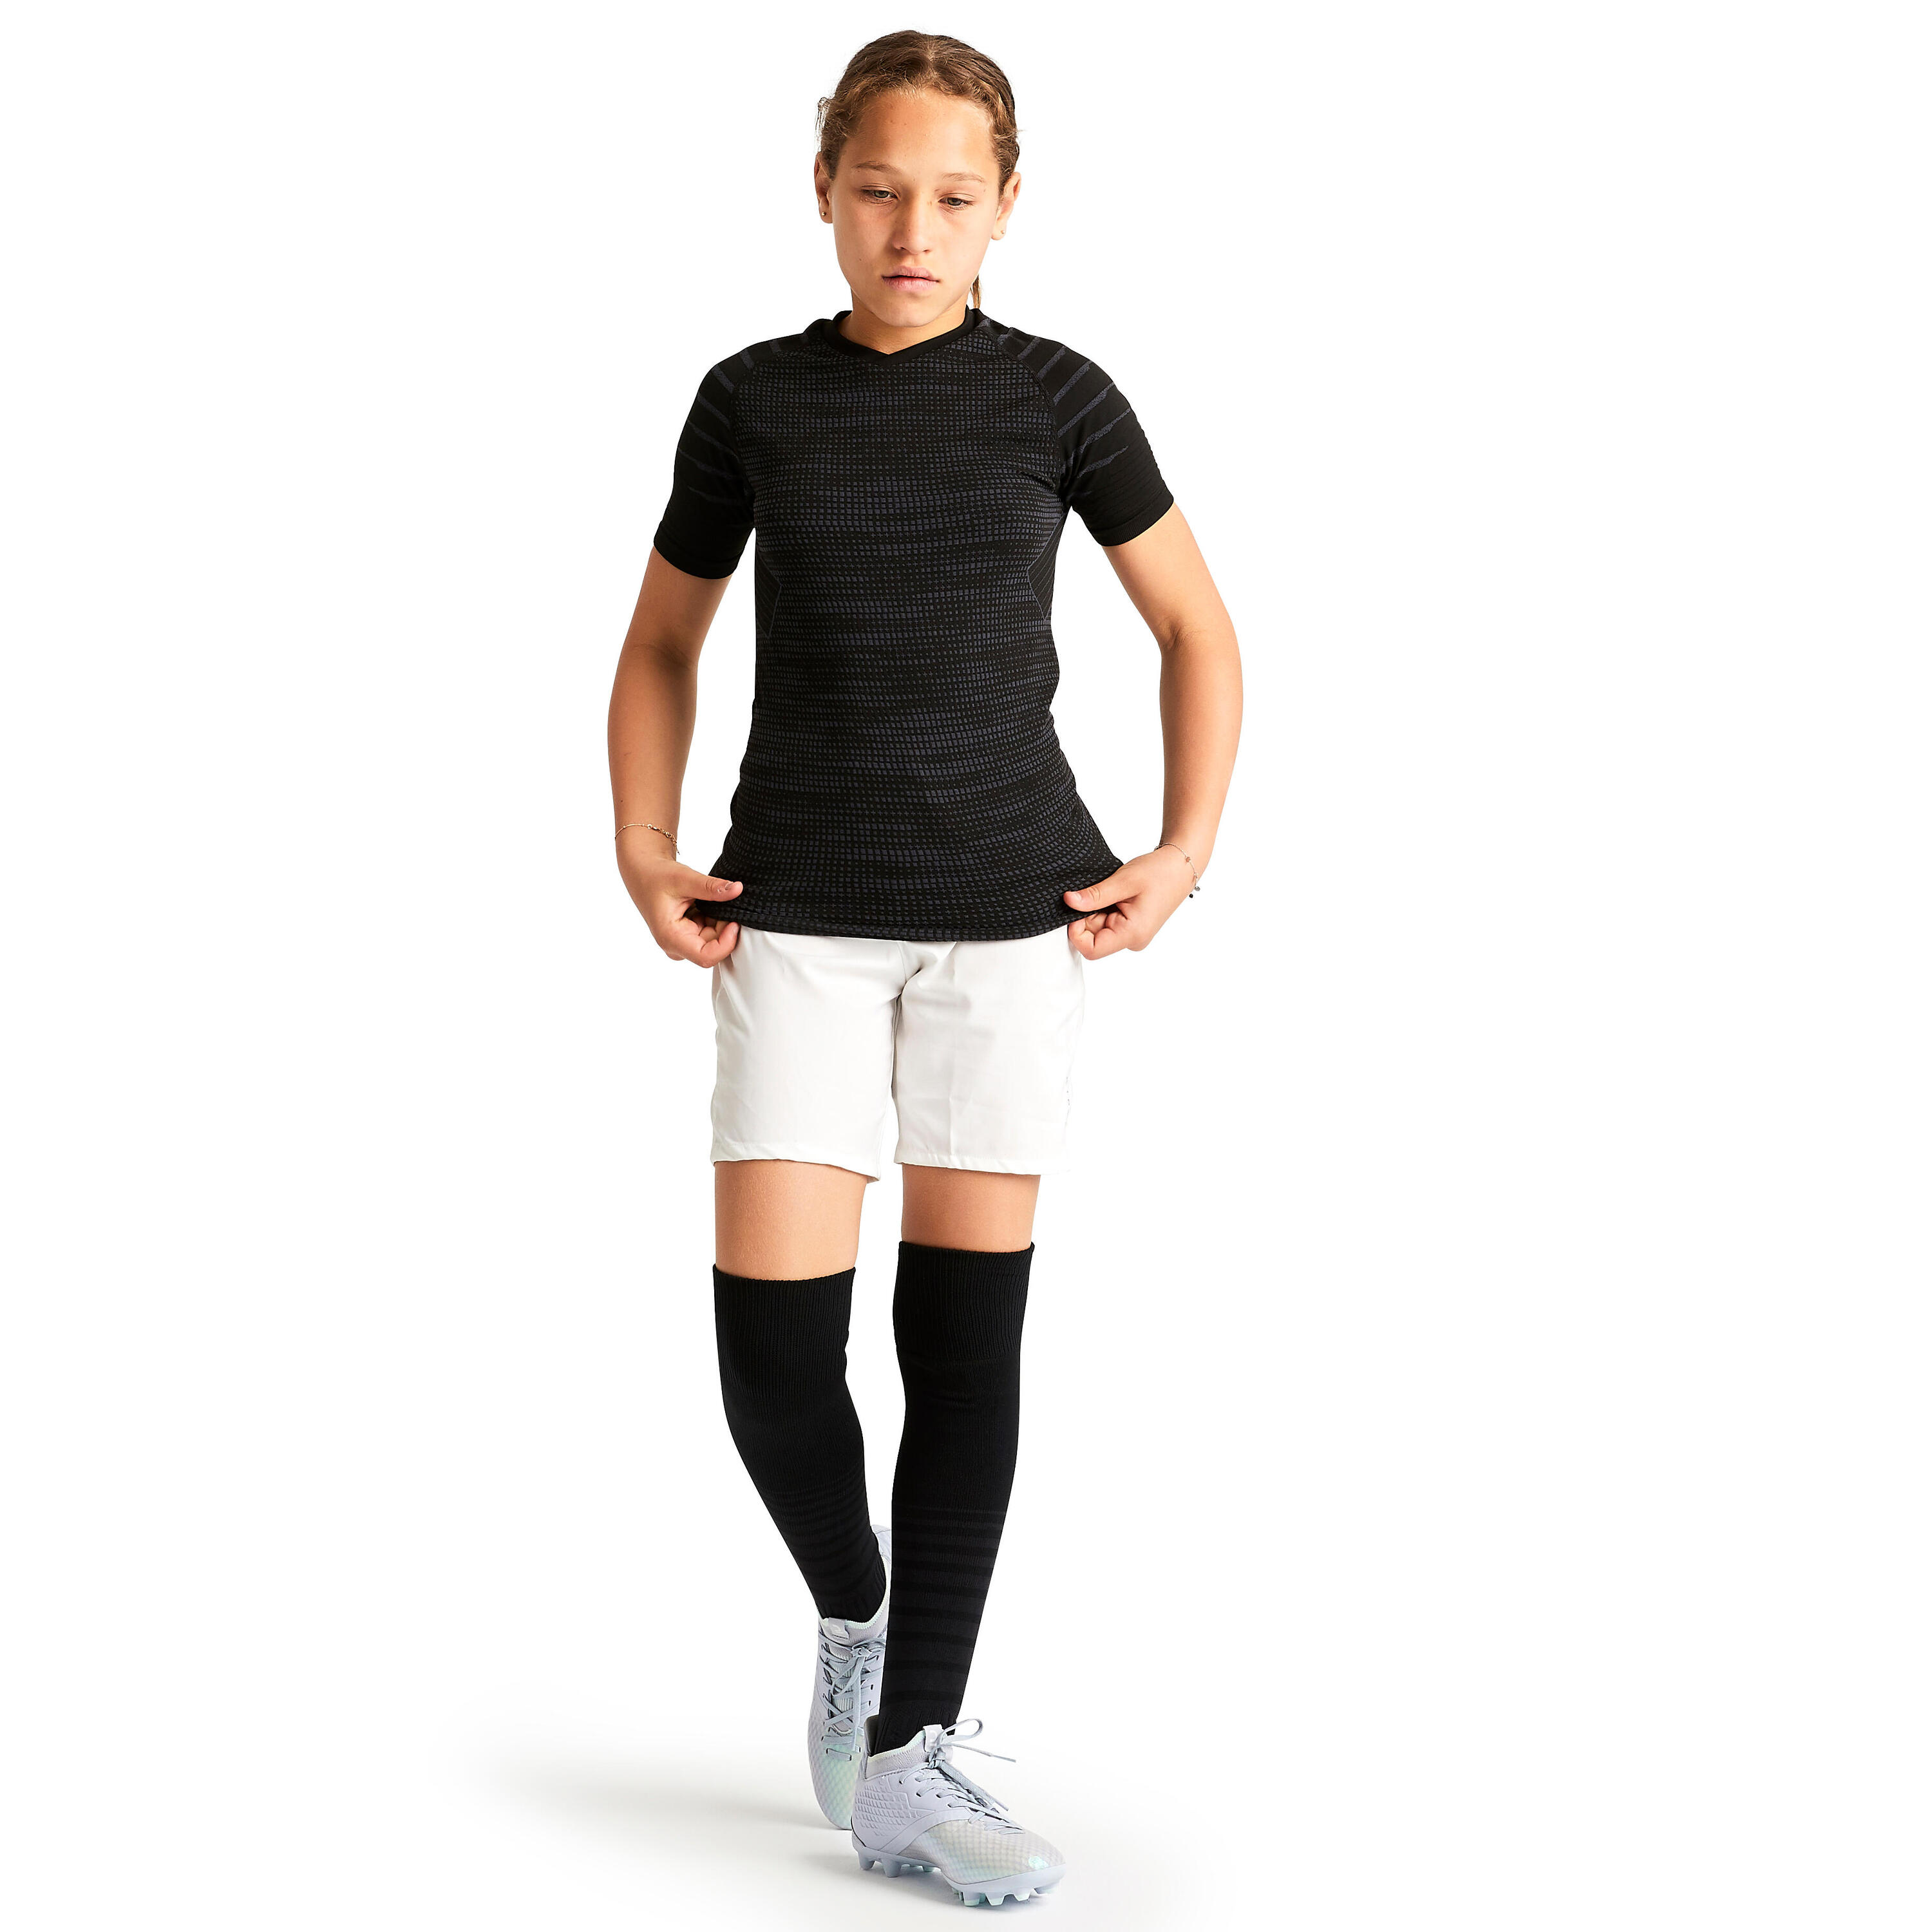 Kids' Short-Sleeved Thermal Base Layer Top Keepdry 500 - Black 5/10